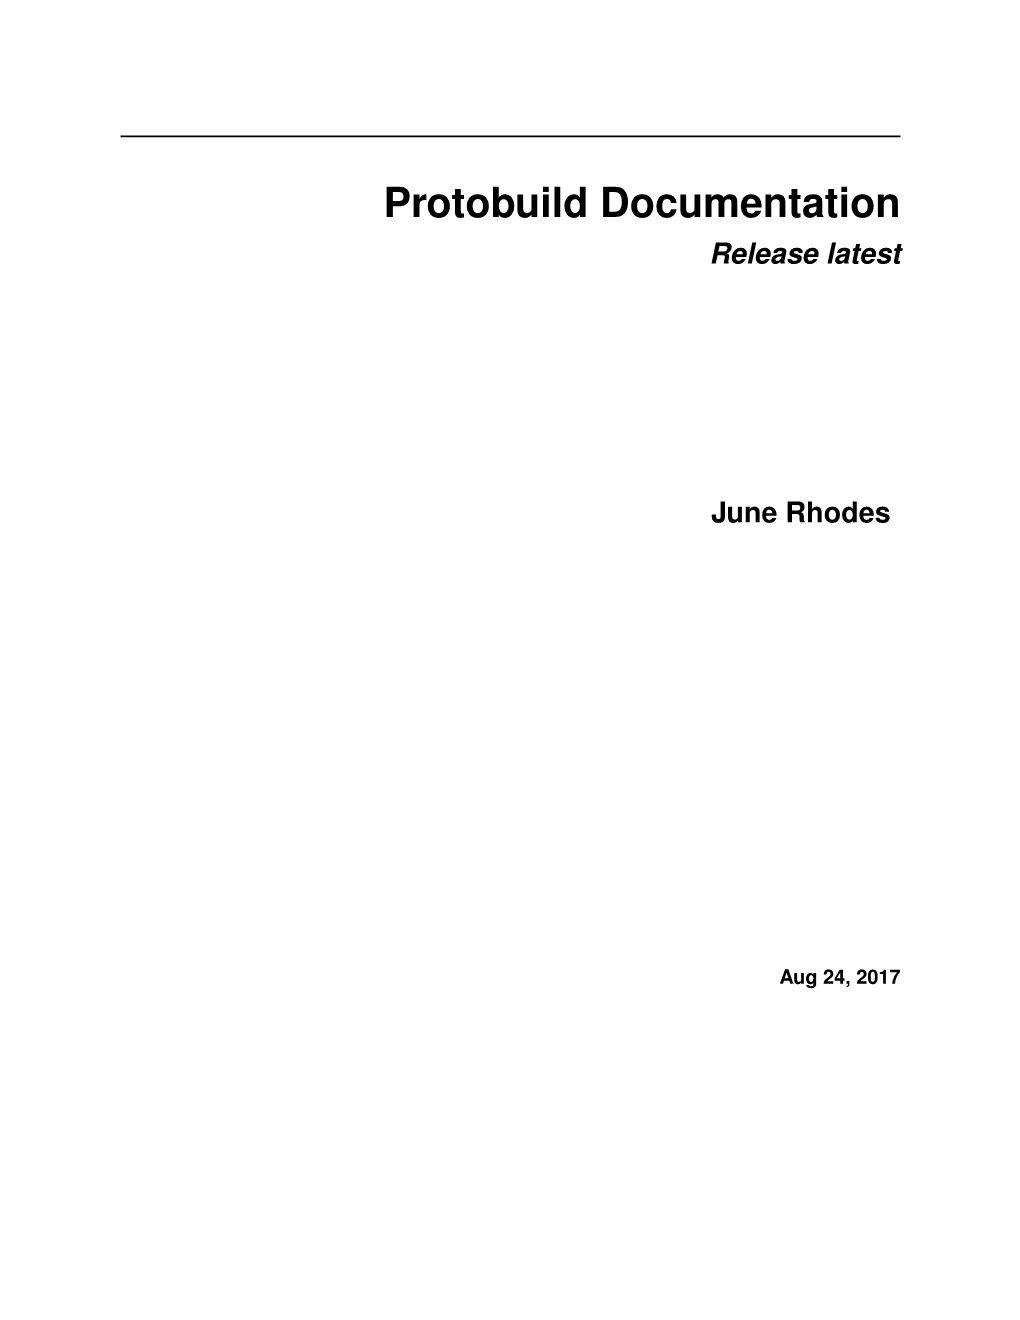 Protobuild Documentation Release Latest